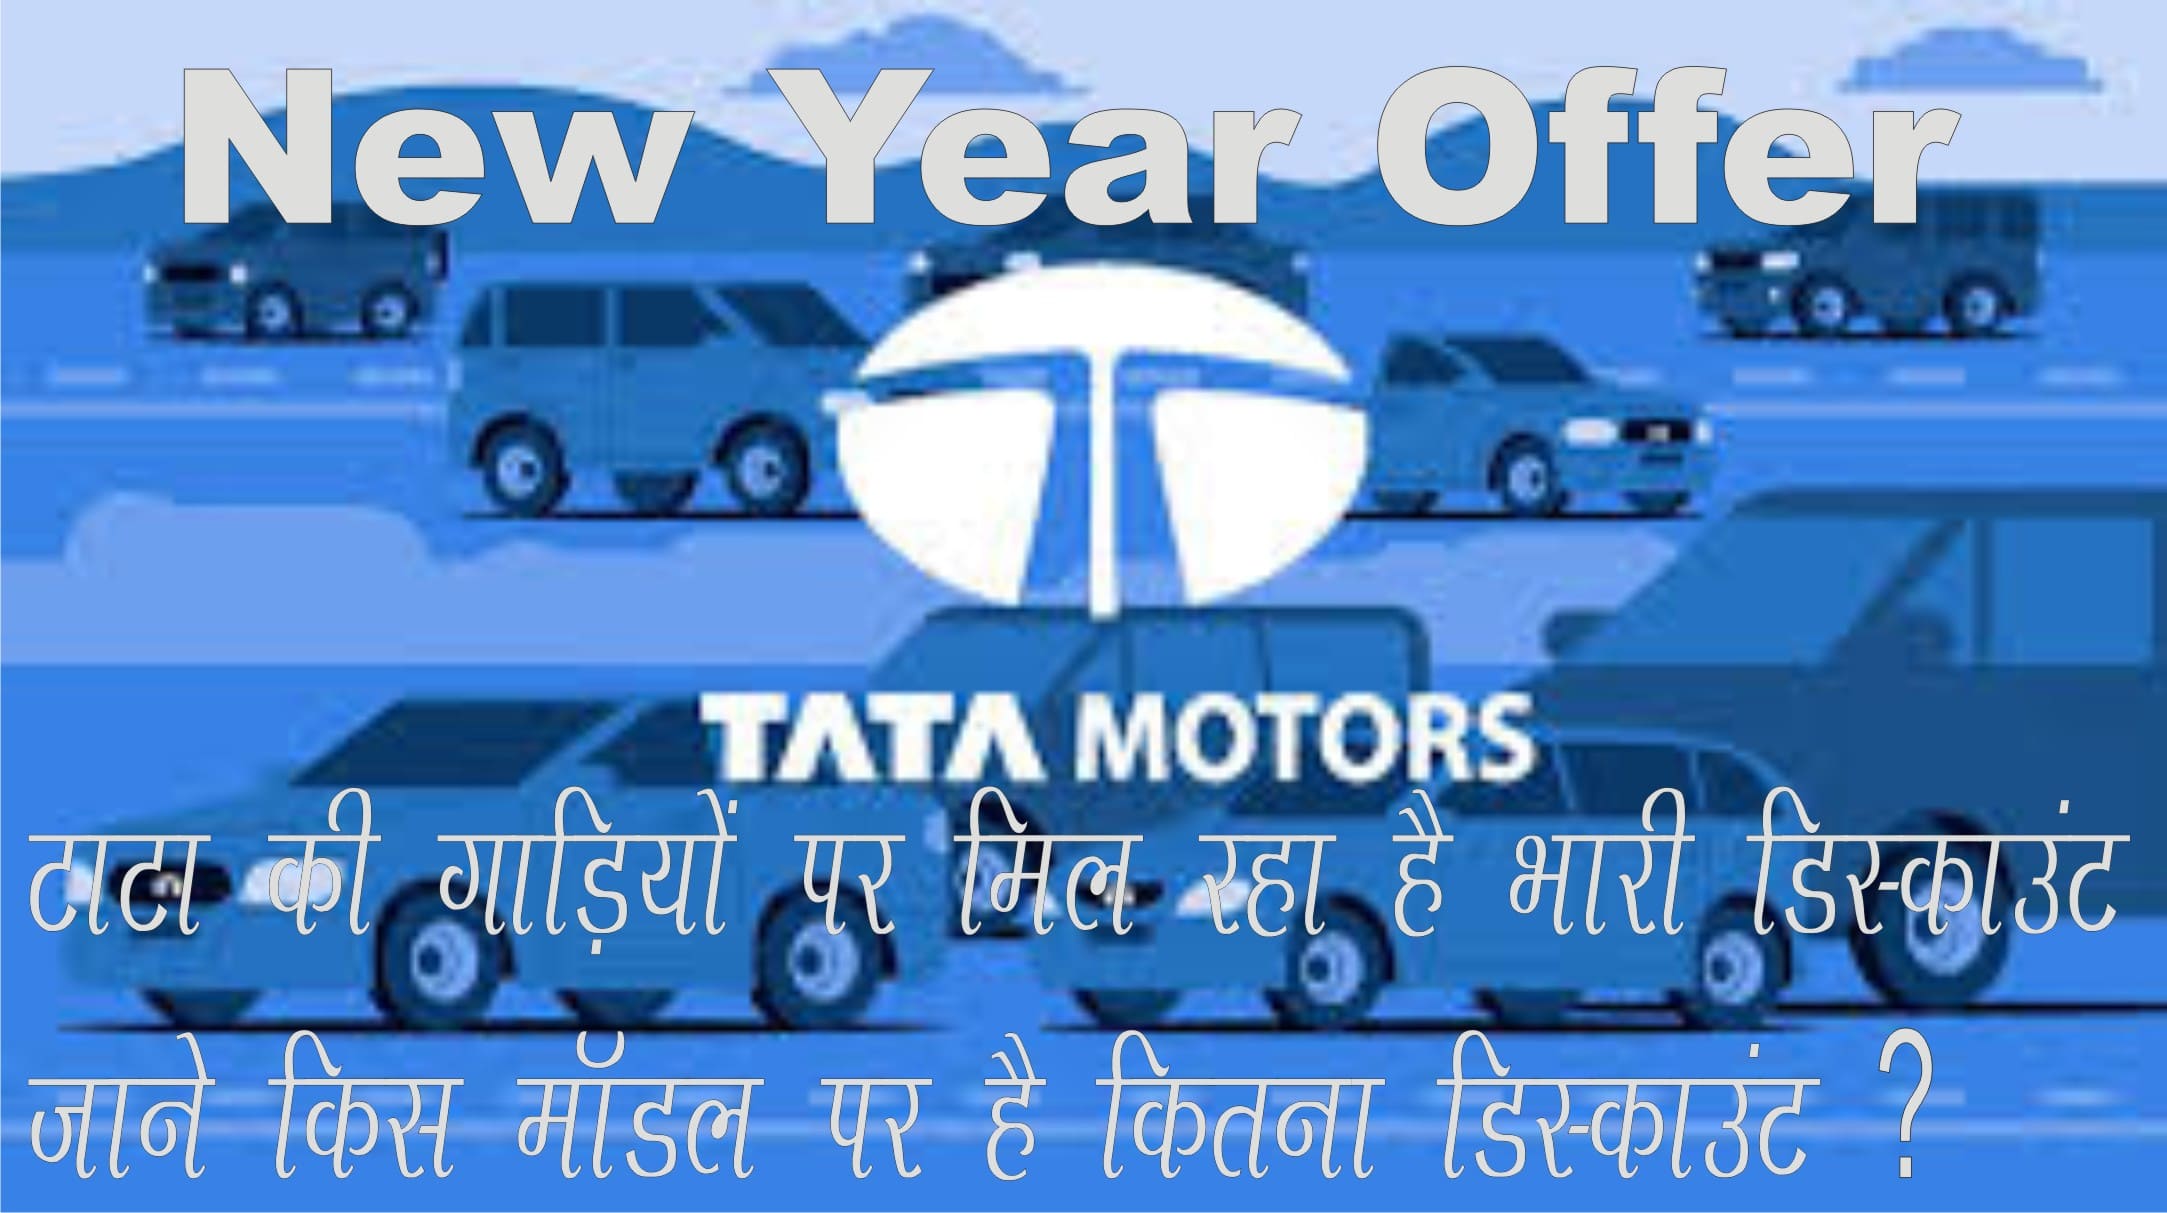 New year offer of tata motors